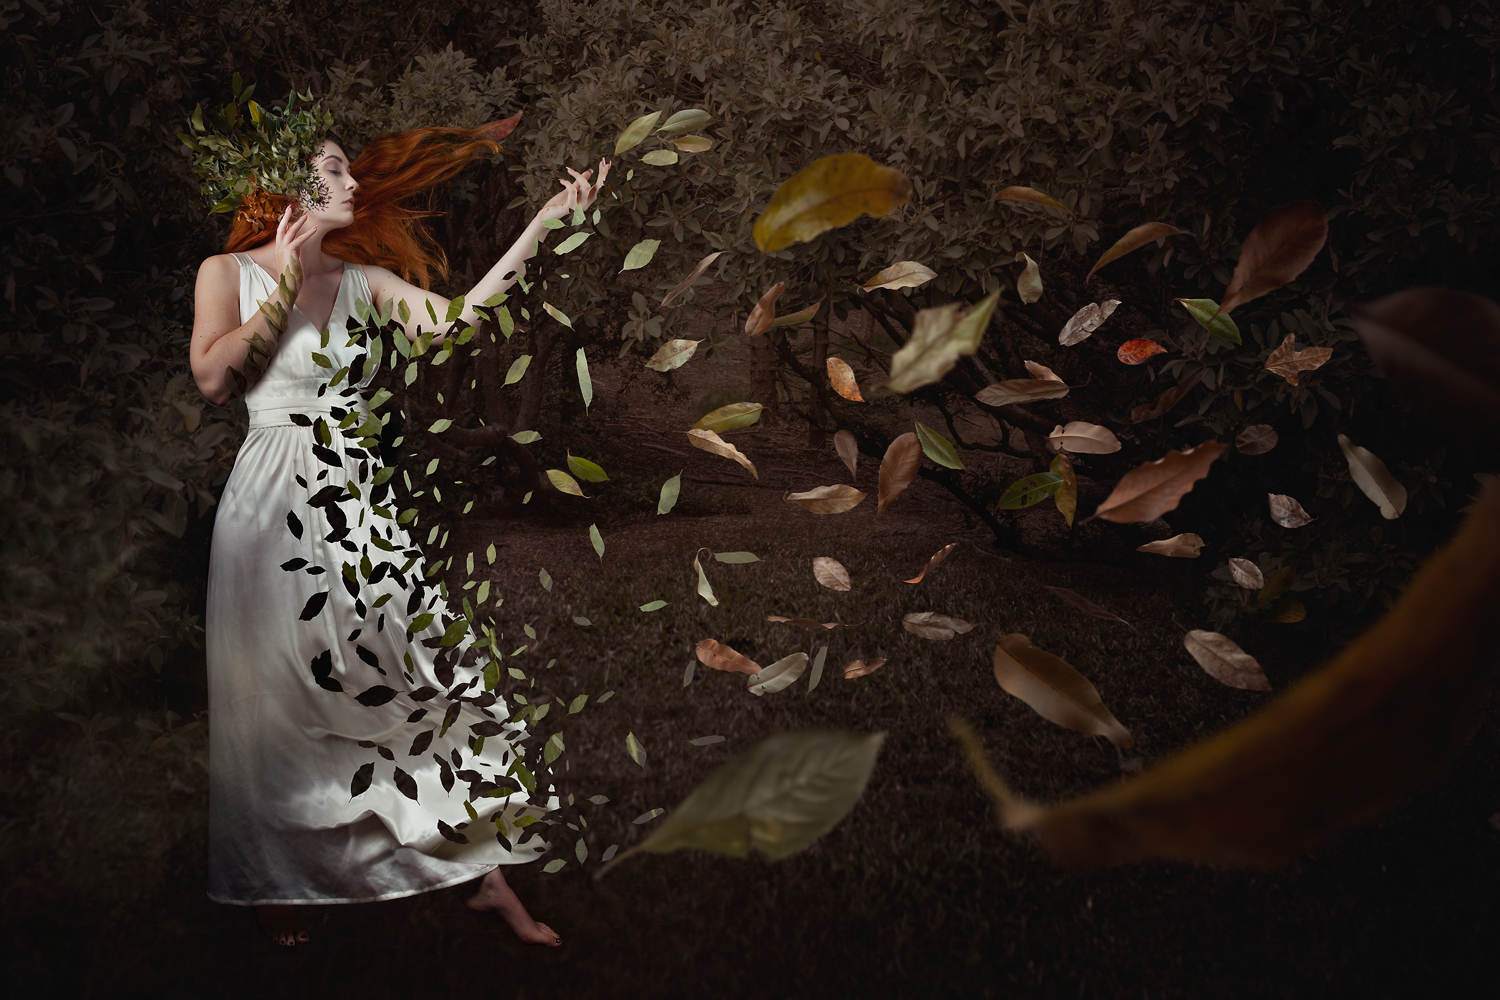 Autumn leaves by Hayley Roberts | Clayton Utz Art Award 2021 Finalists | Lethbridge Gallery